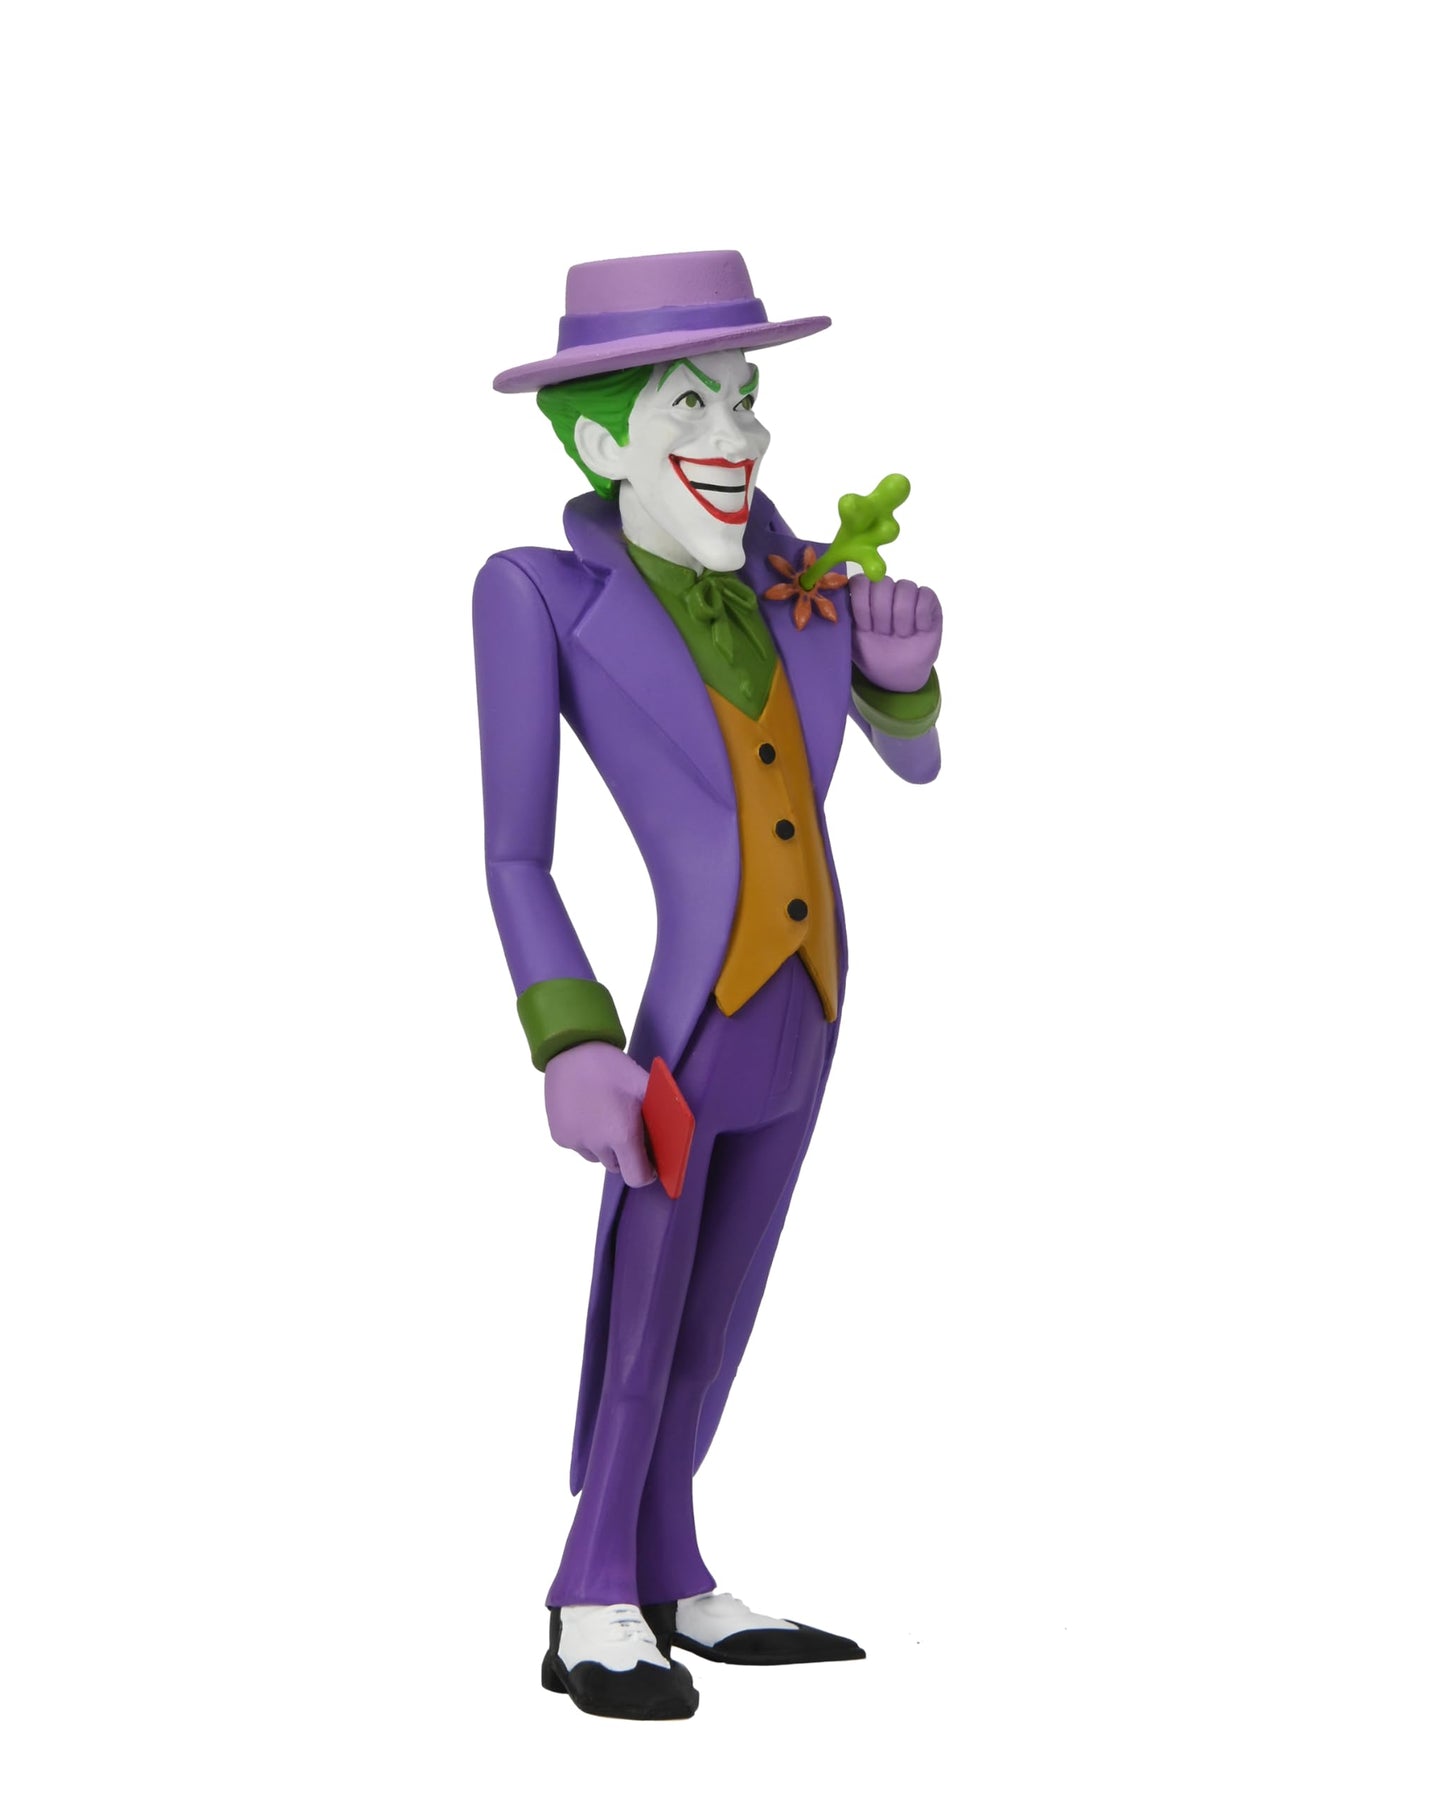 NECA - The Joker 6 Toony Figure Scale Action Figure